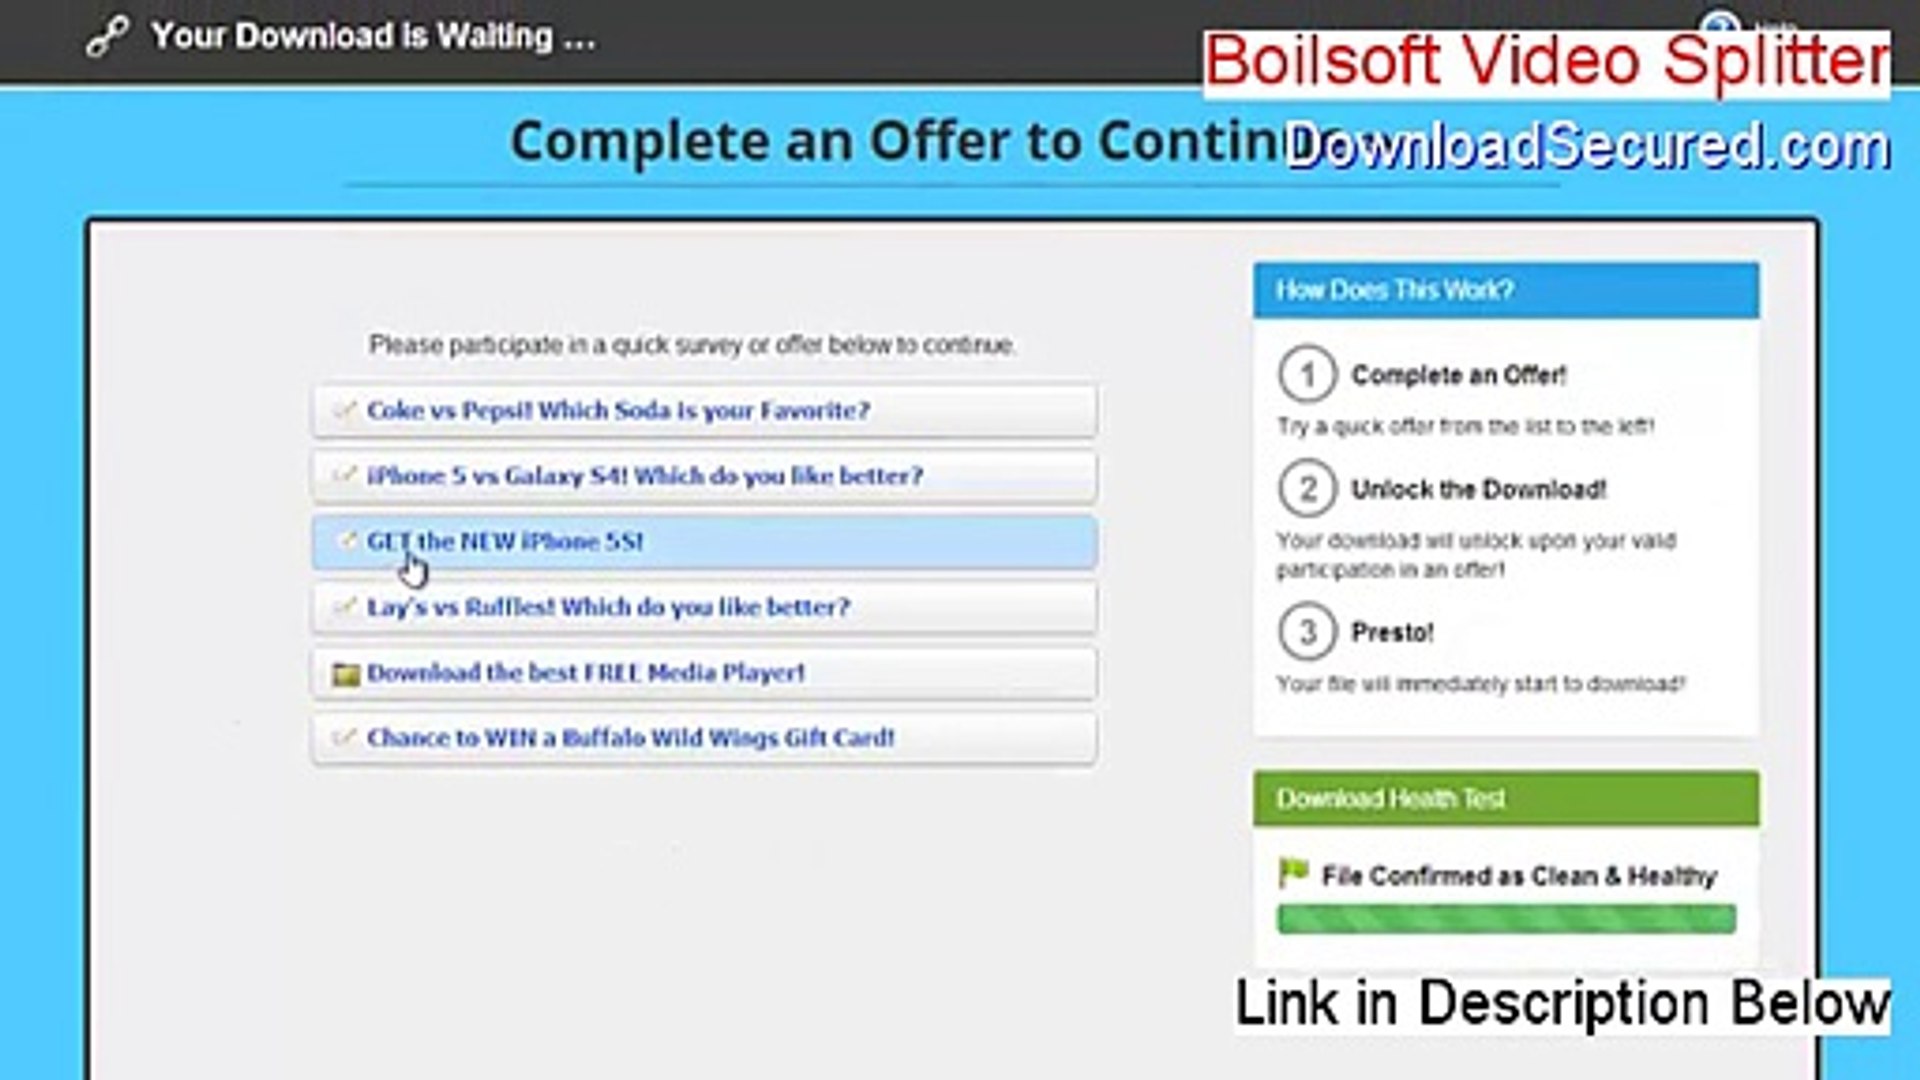 Boilsoft Video Splitter Full Download (Instant Download) - video Dailymotion